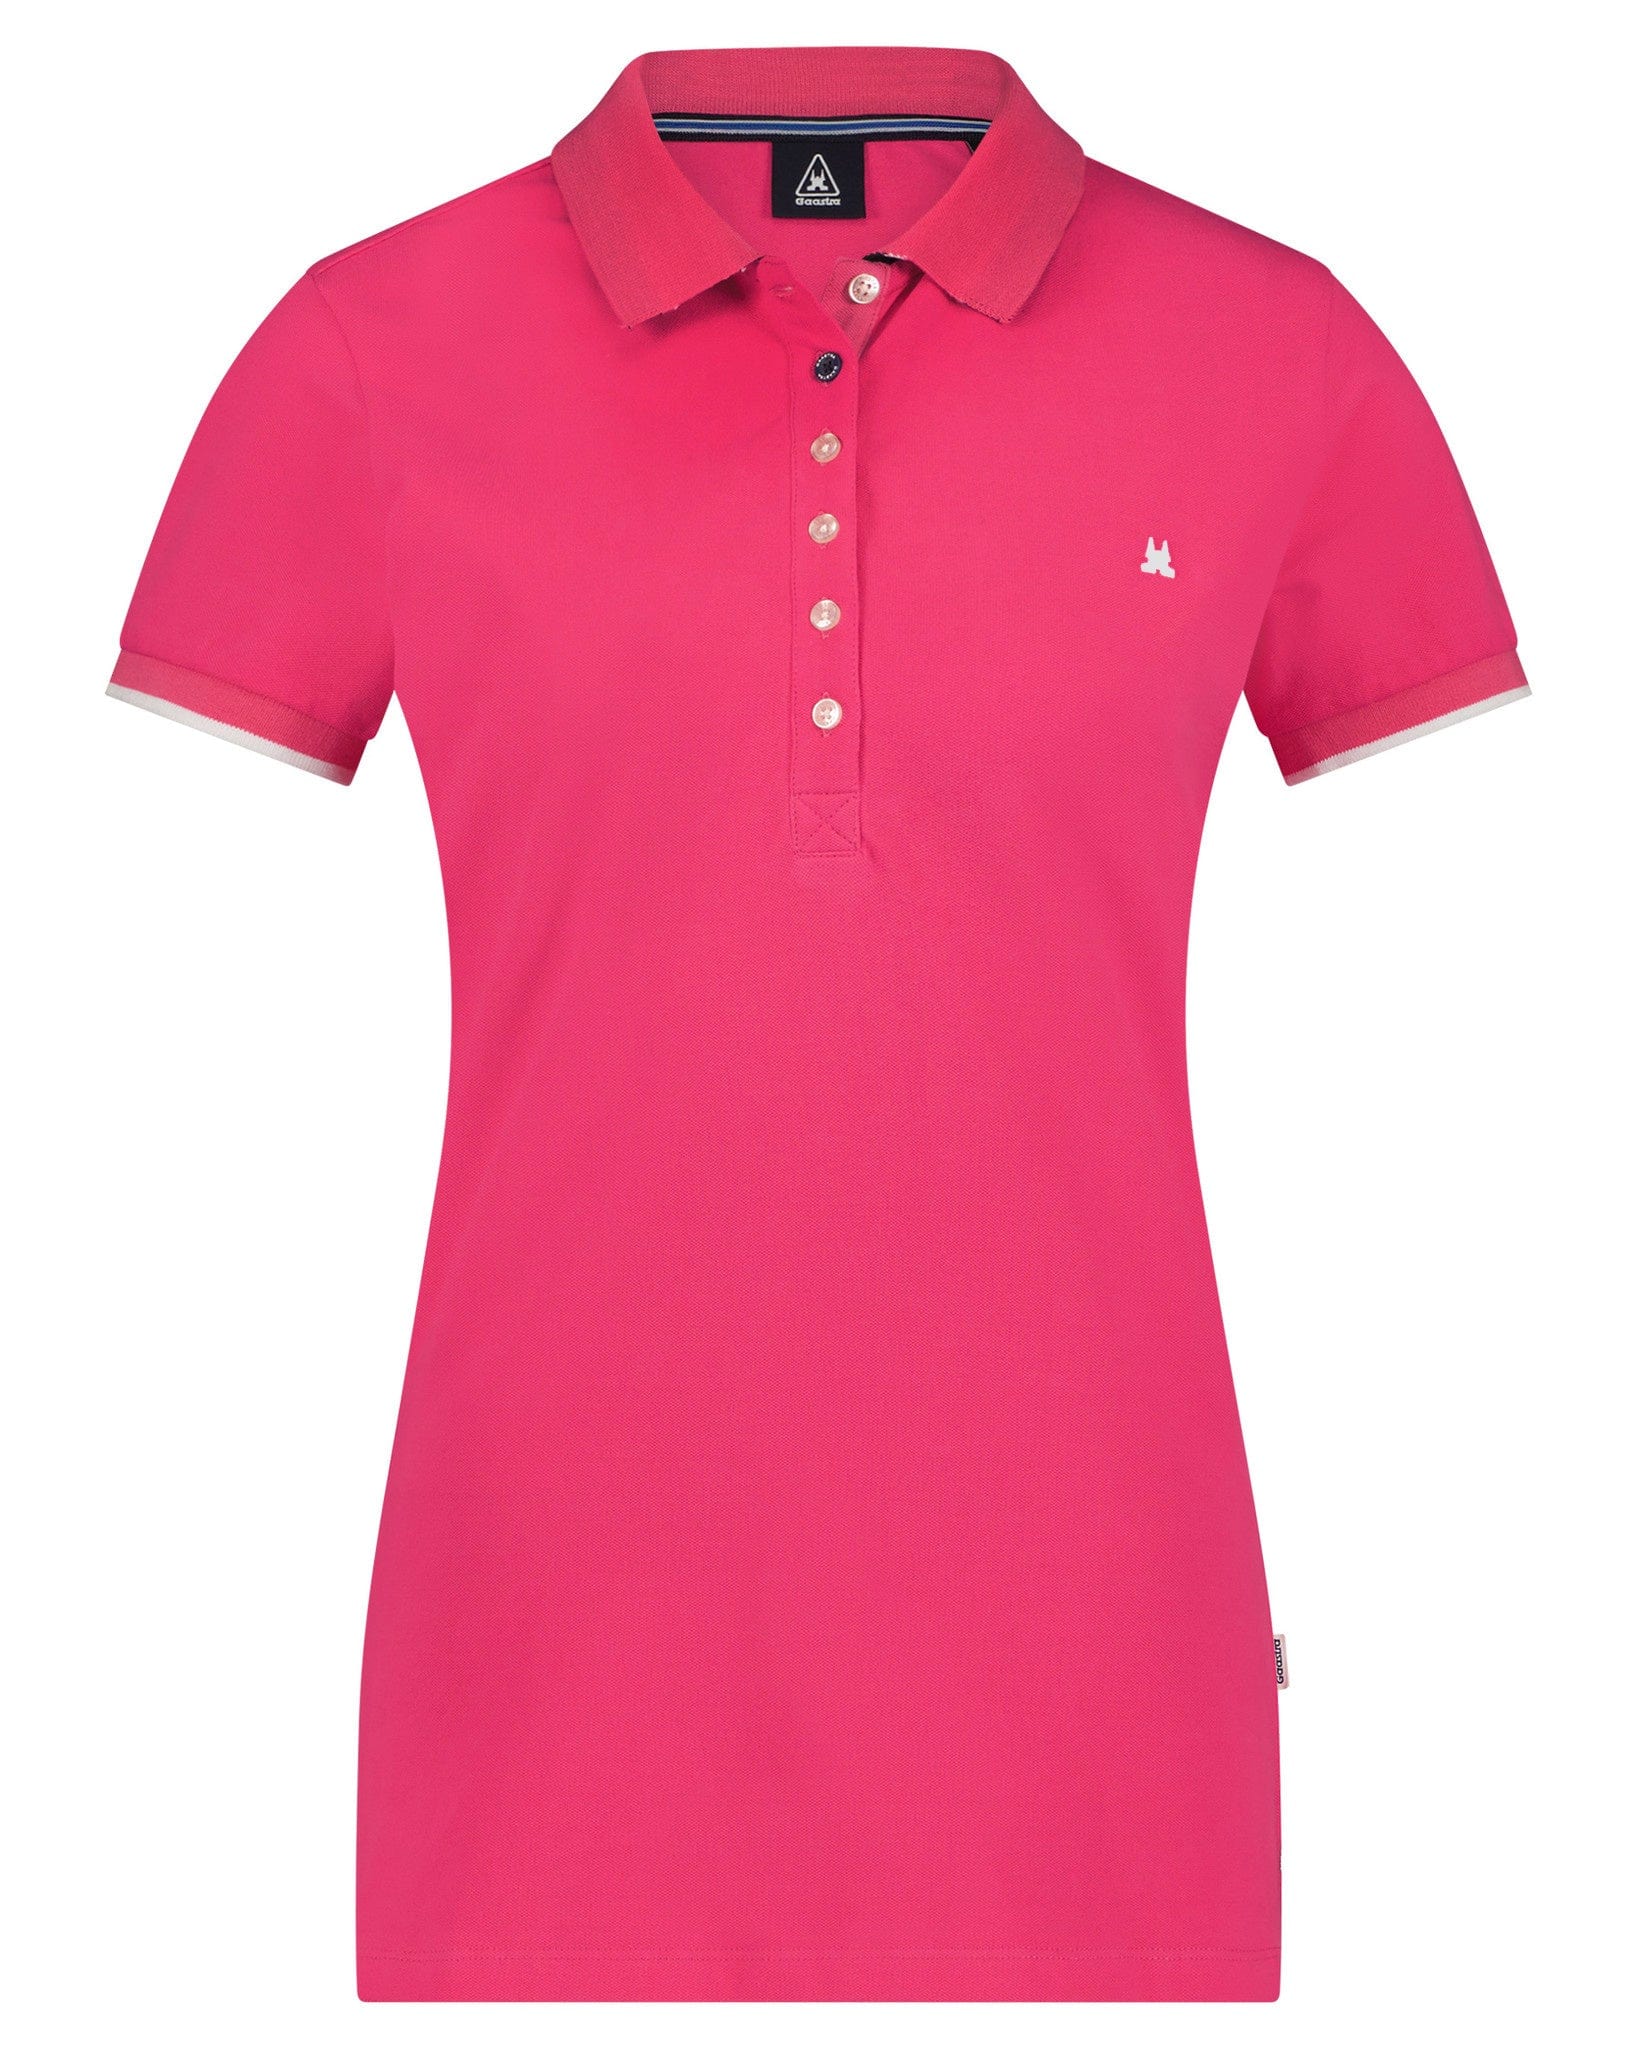 woestenij Verdorde In het algemeen Gaastra Poloshirt basic - 100% katoen - roze - Stateshop Fashion